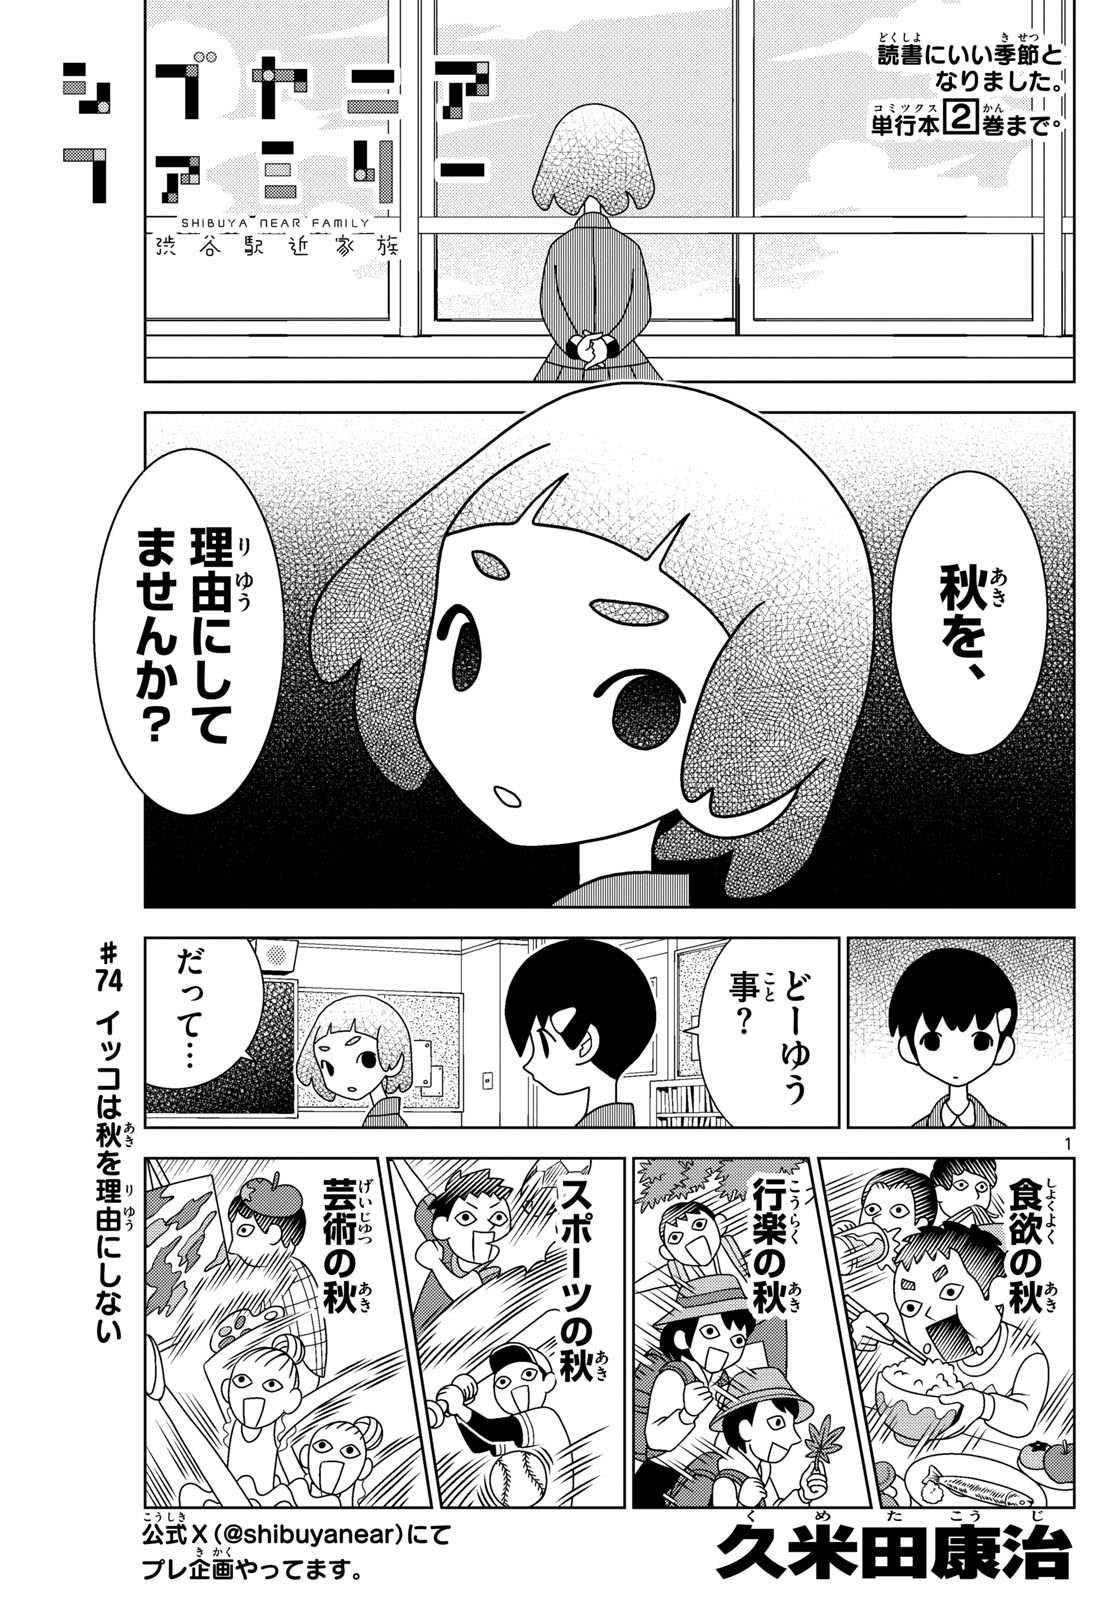 Shibuya Near Family - Chapter 074 - Page 1